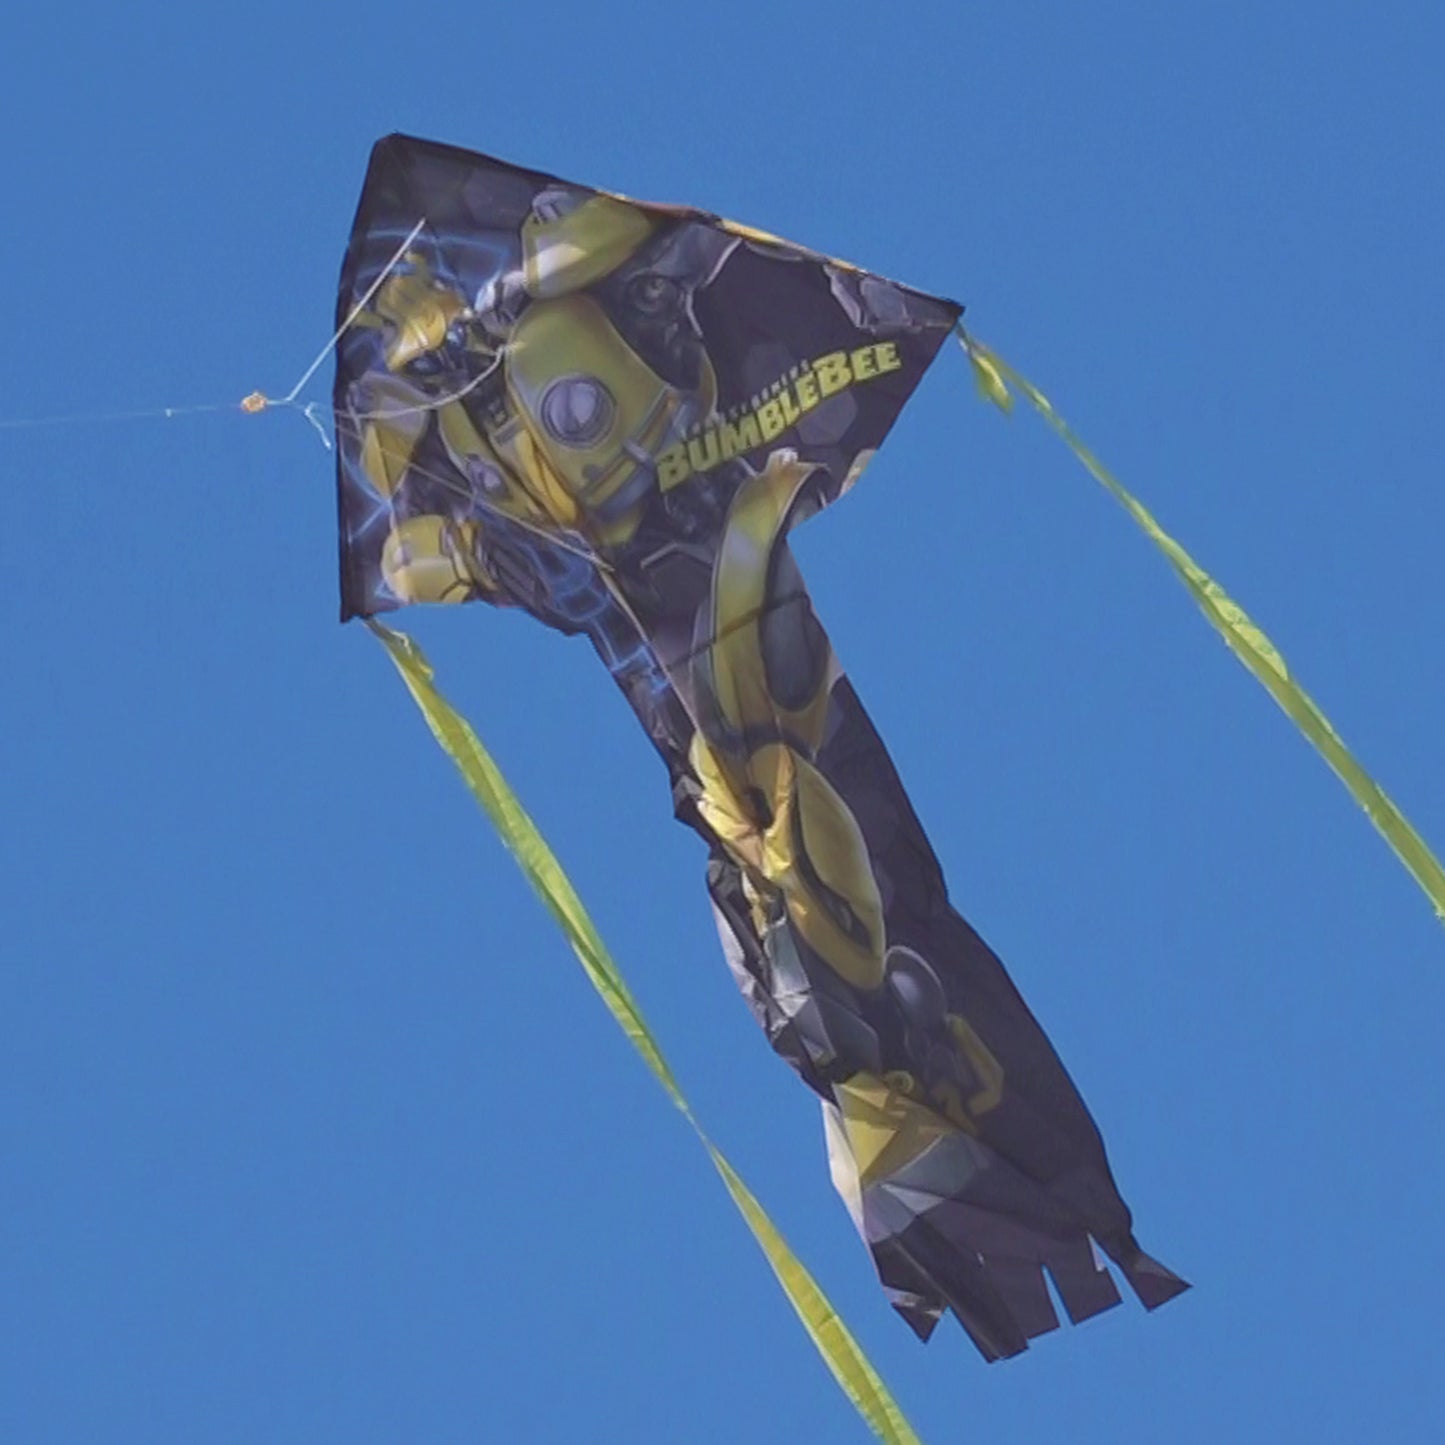 X Kites skyflier transformers bumble bee nylon kite flying